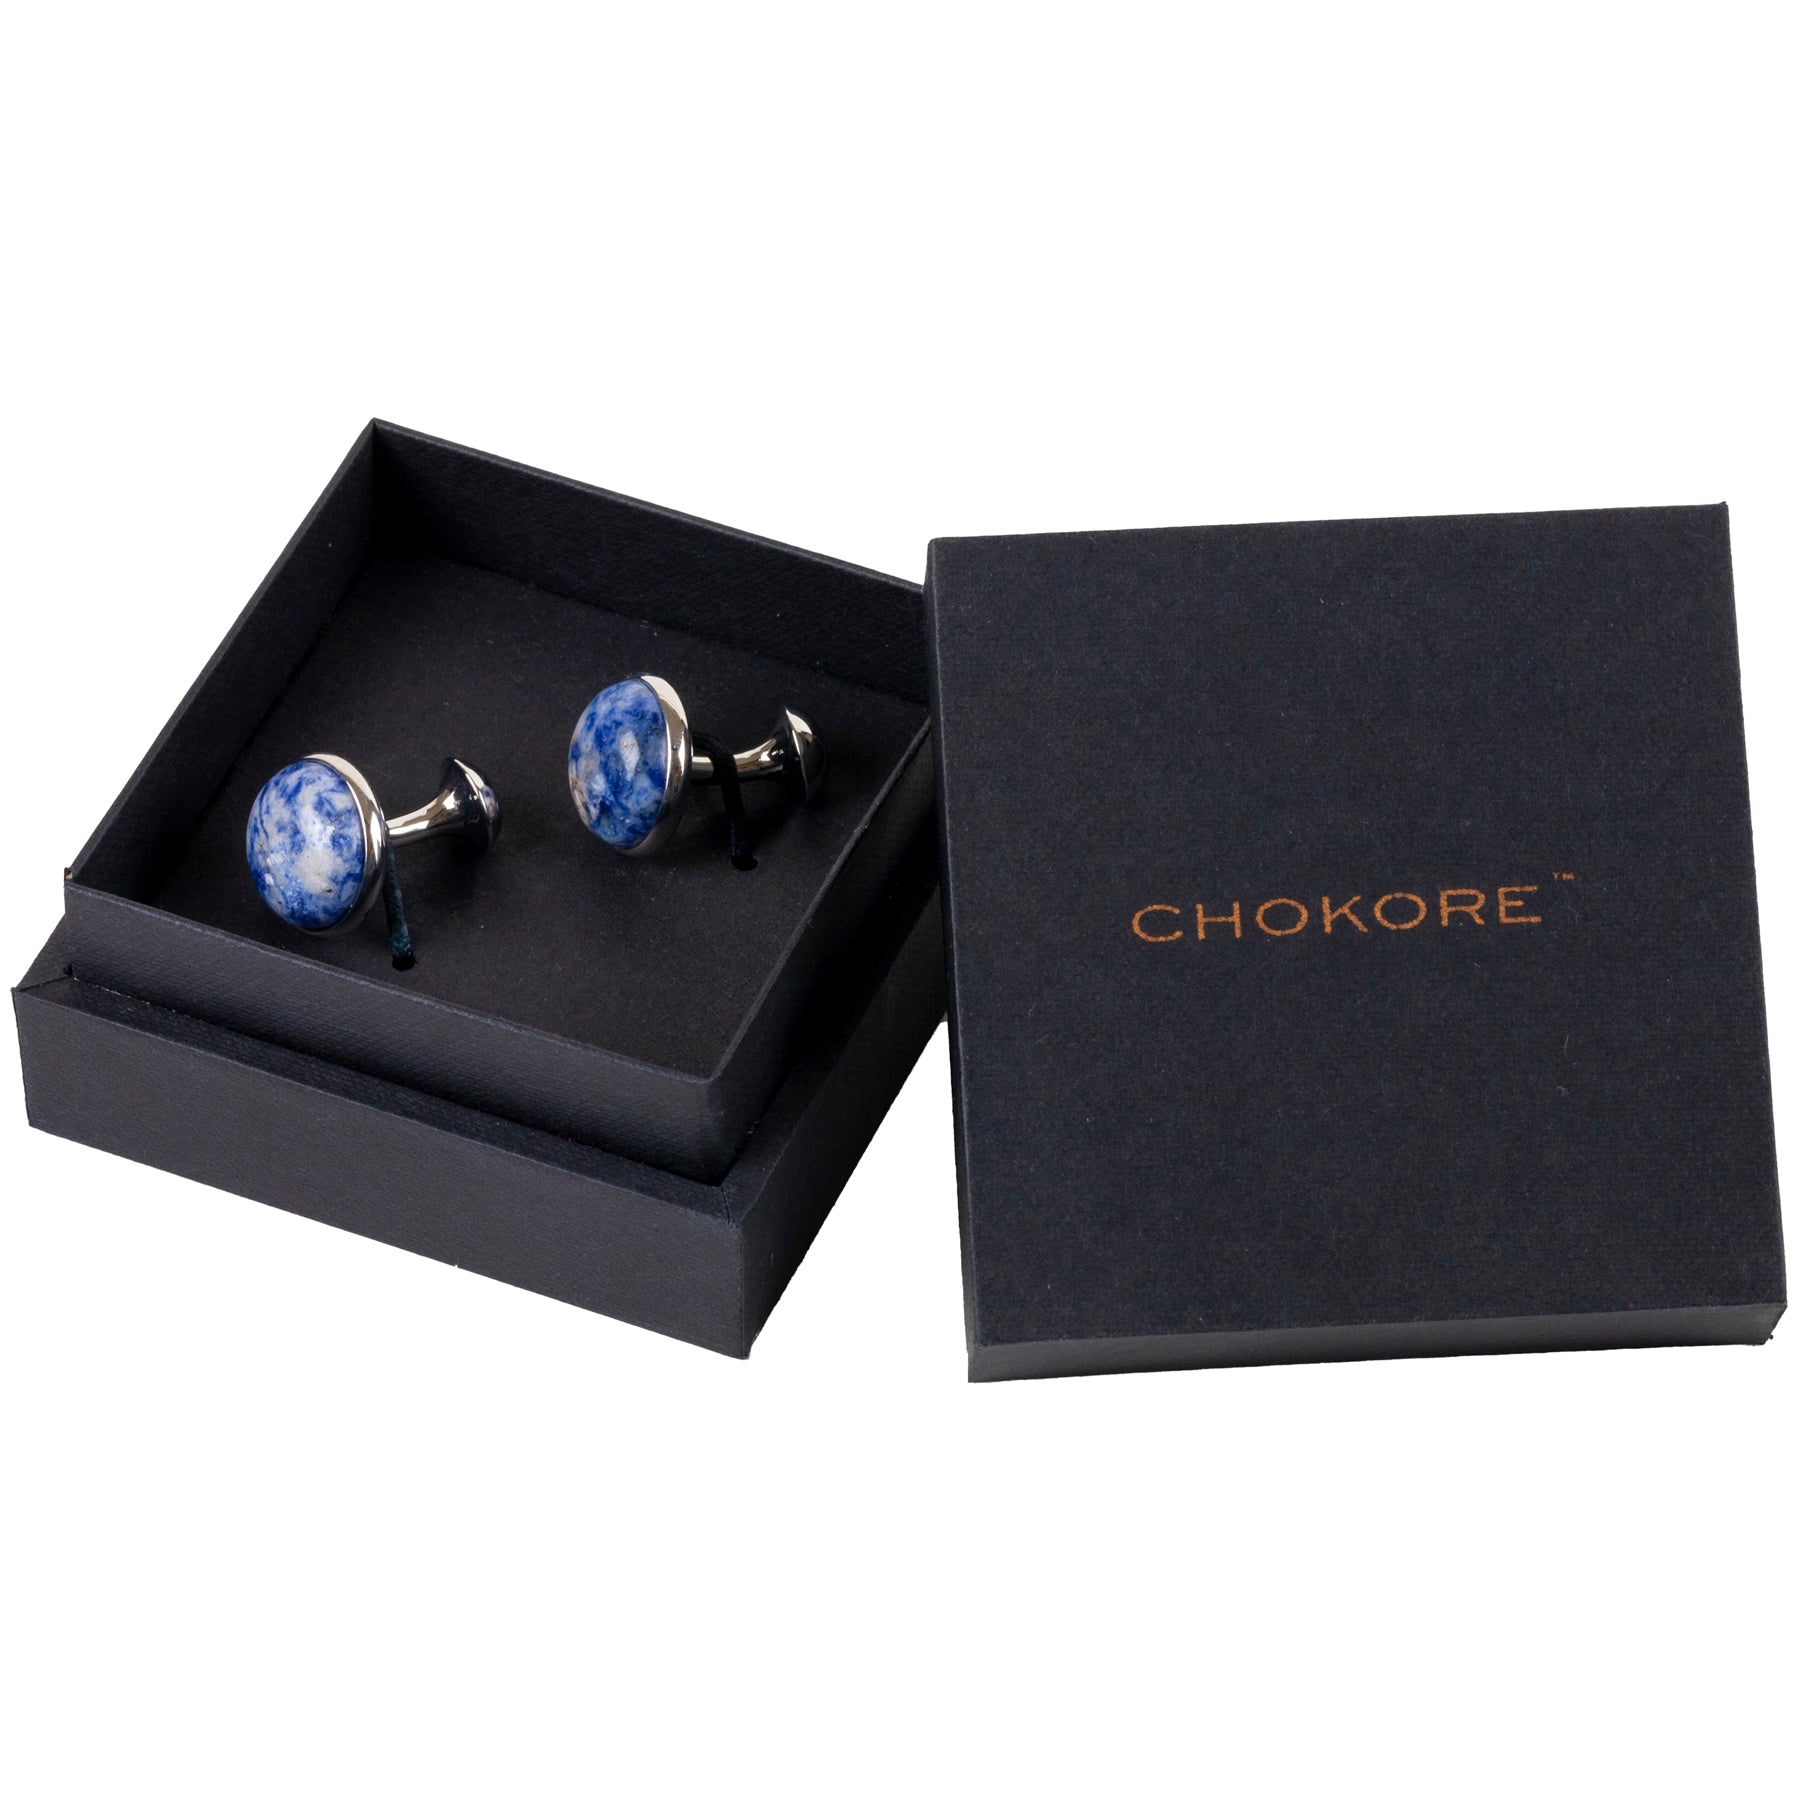 Chokore Silver and Blue Stone Premium Range of Cufflinks